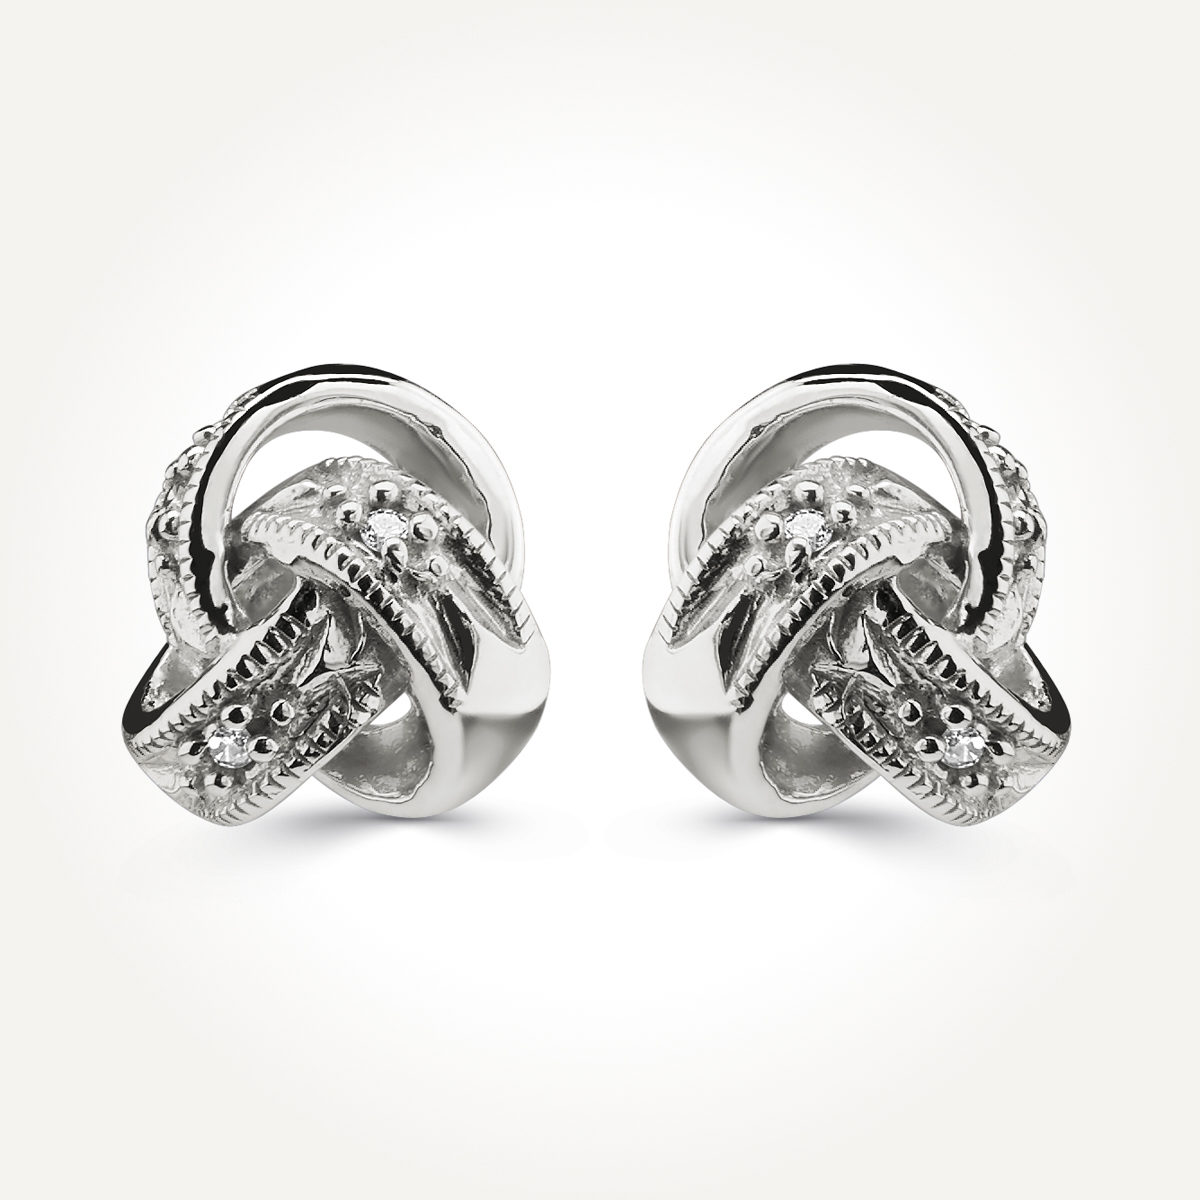 14KT White Gold Diamond Link Earrings 0.02 CT. T.W.